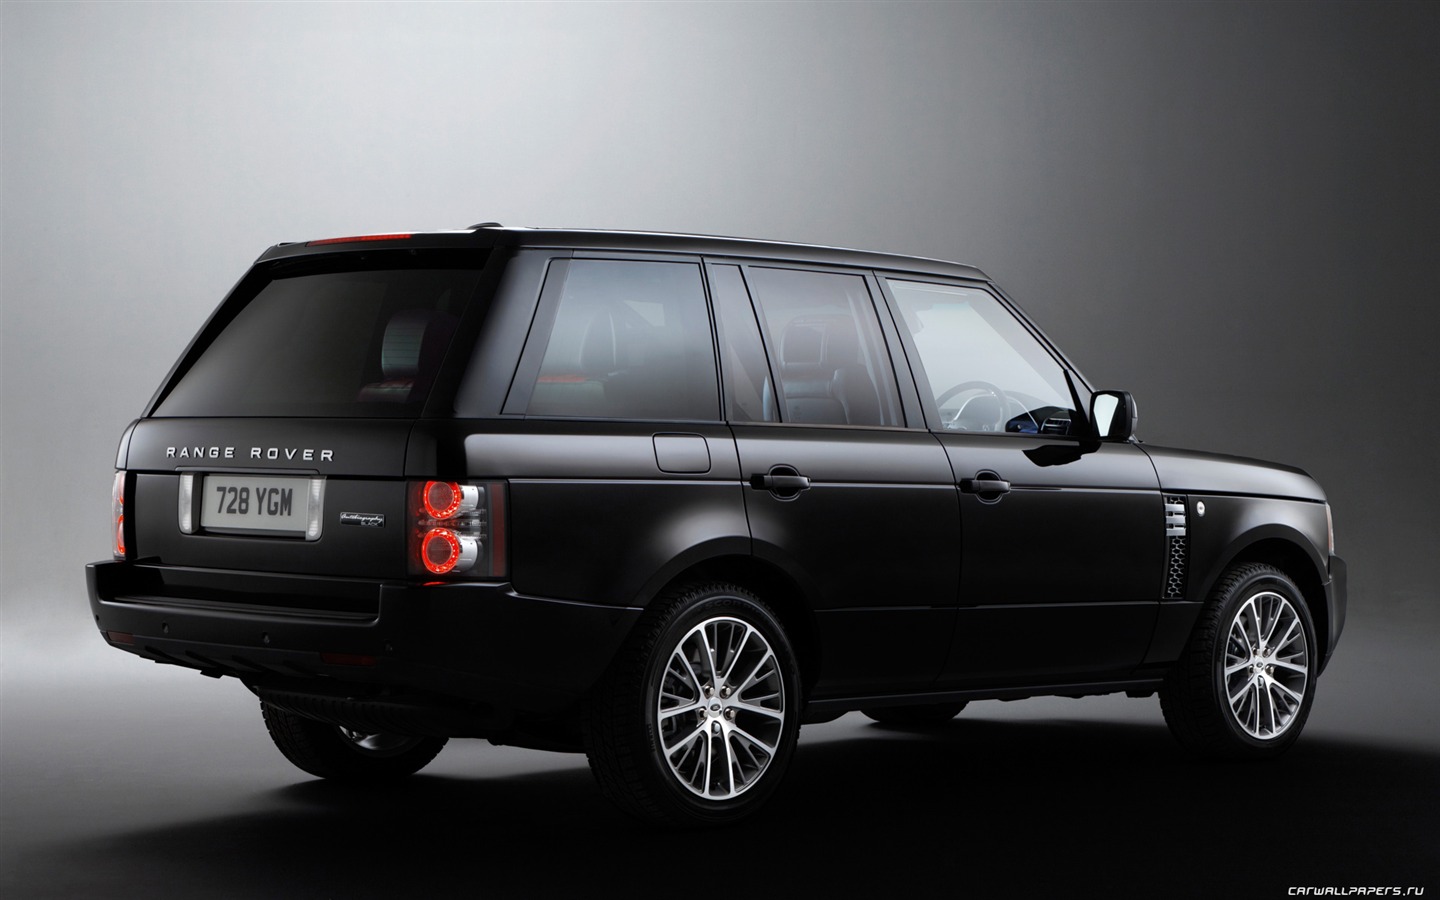 Land Rover Range Rover Black Edition - 2011 路虎 #19 - 1440x900